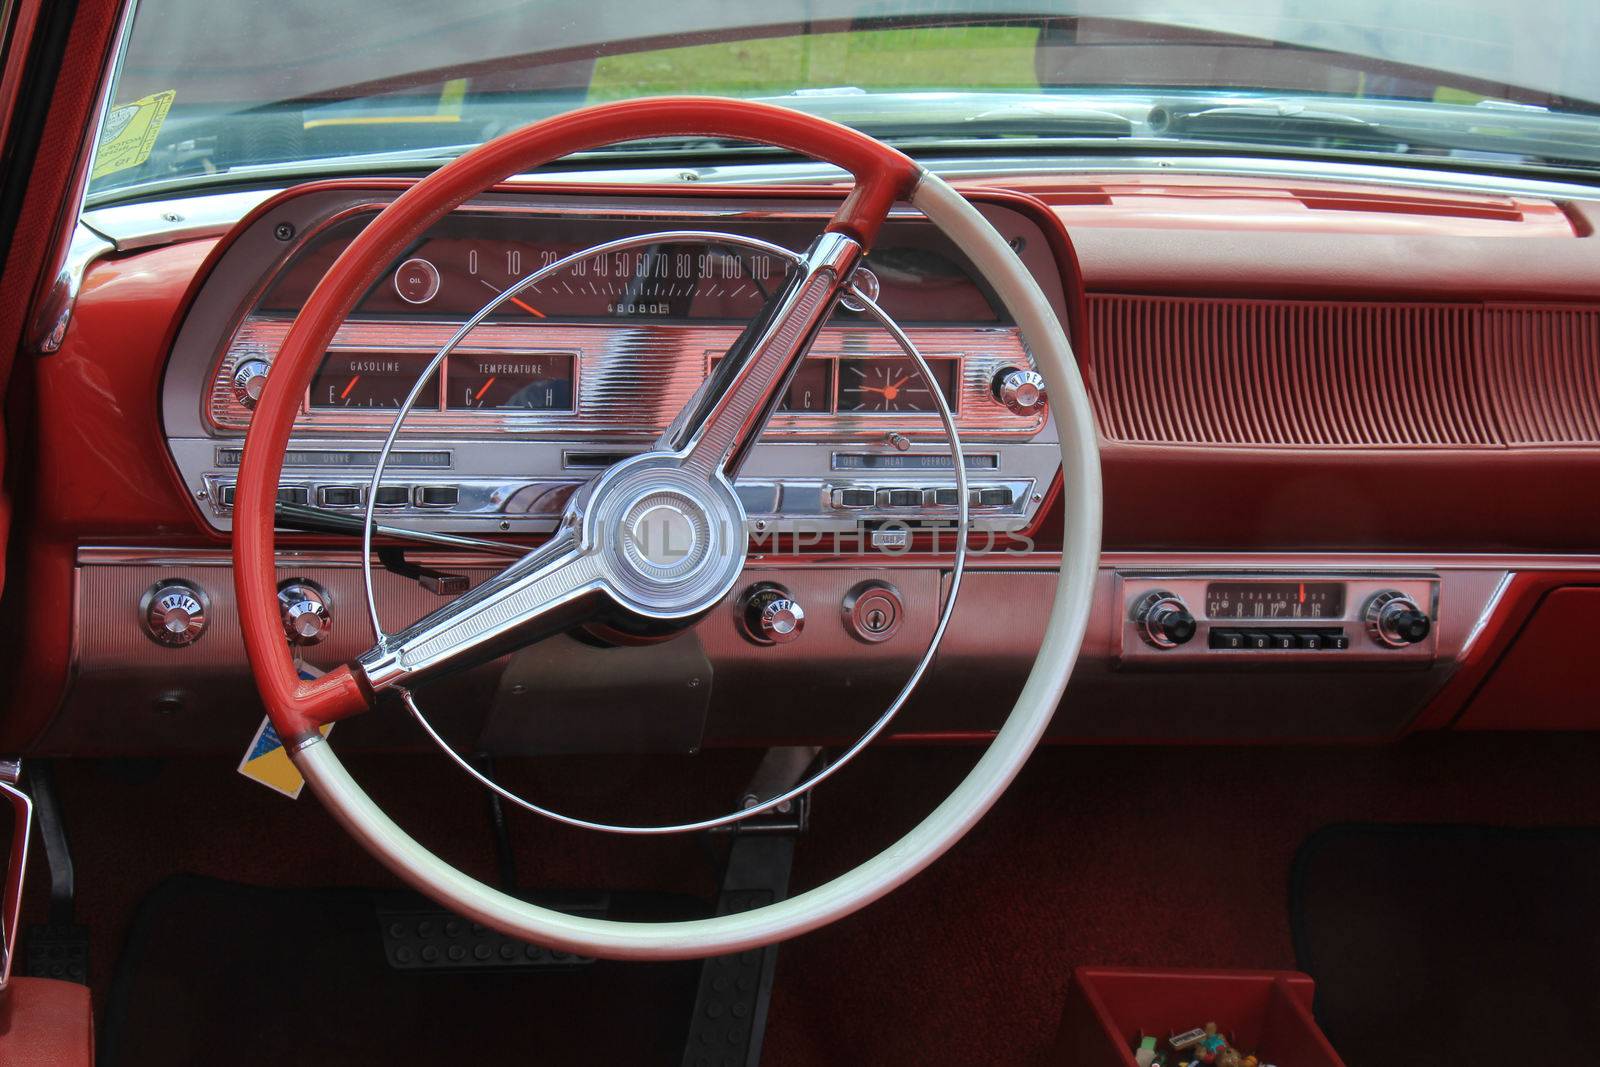 Dashboard of a vintage sports car